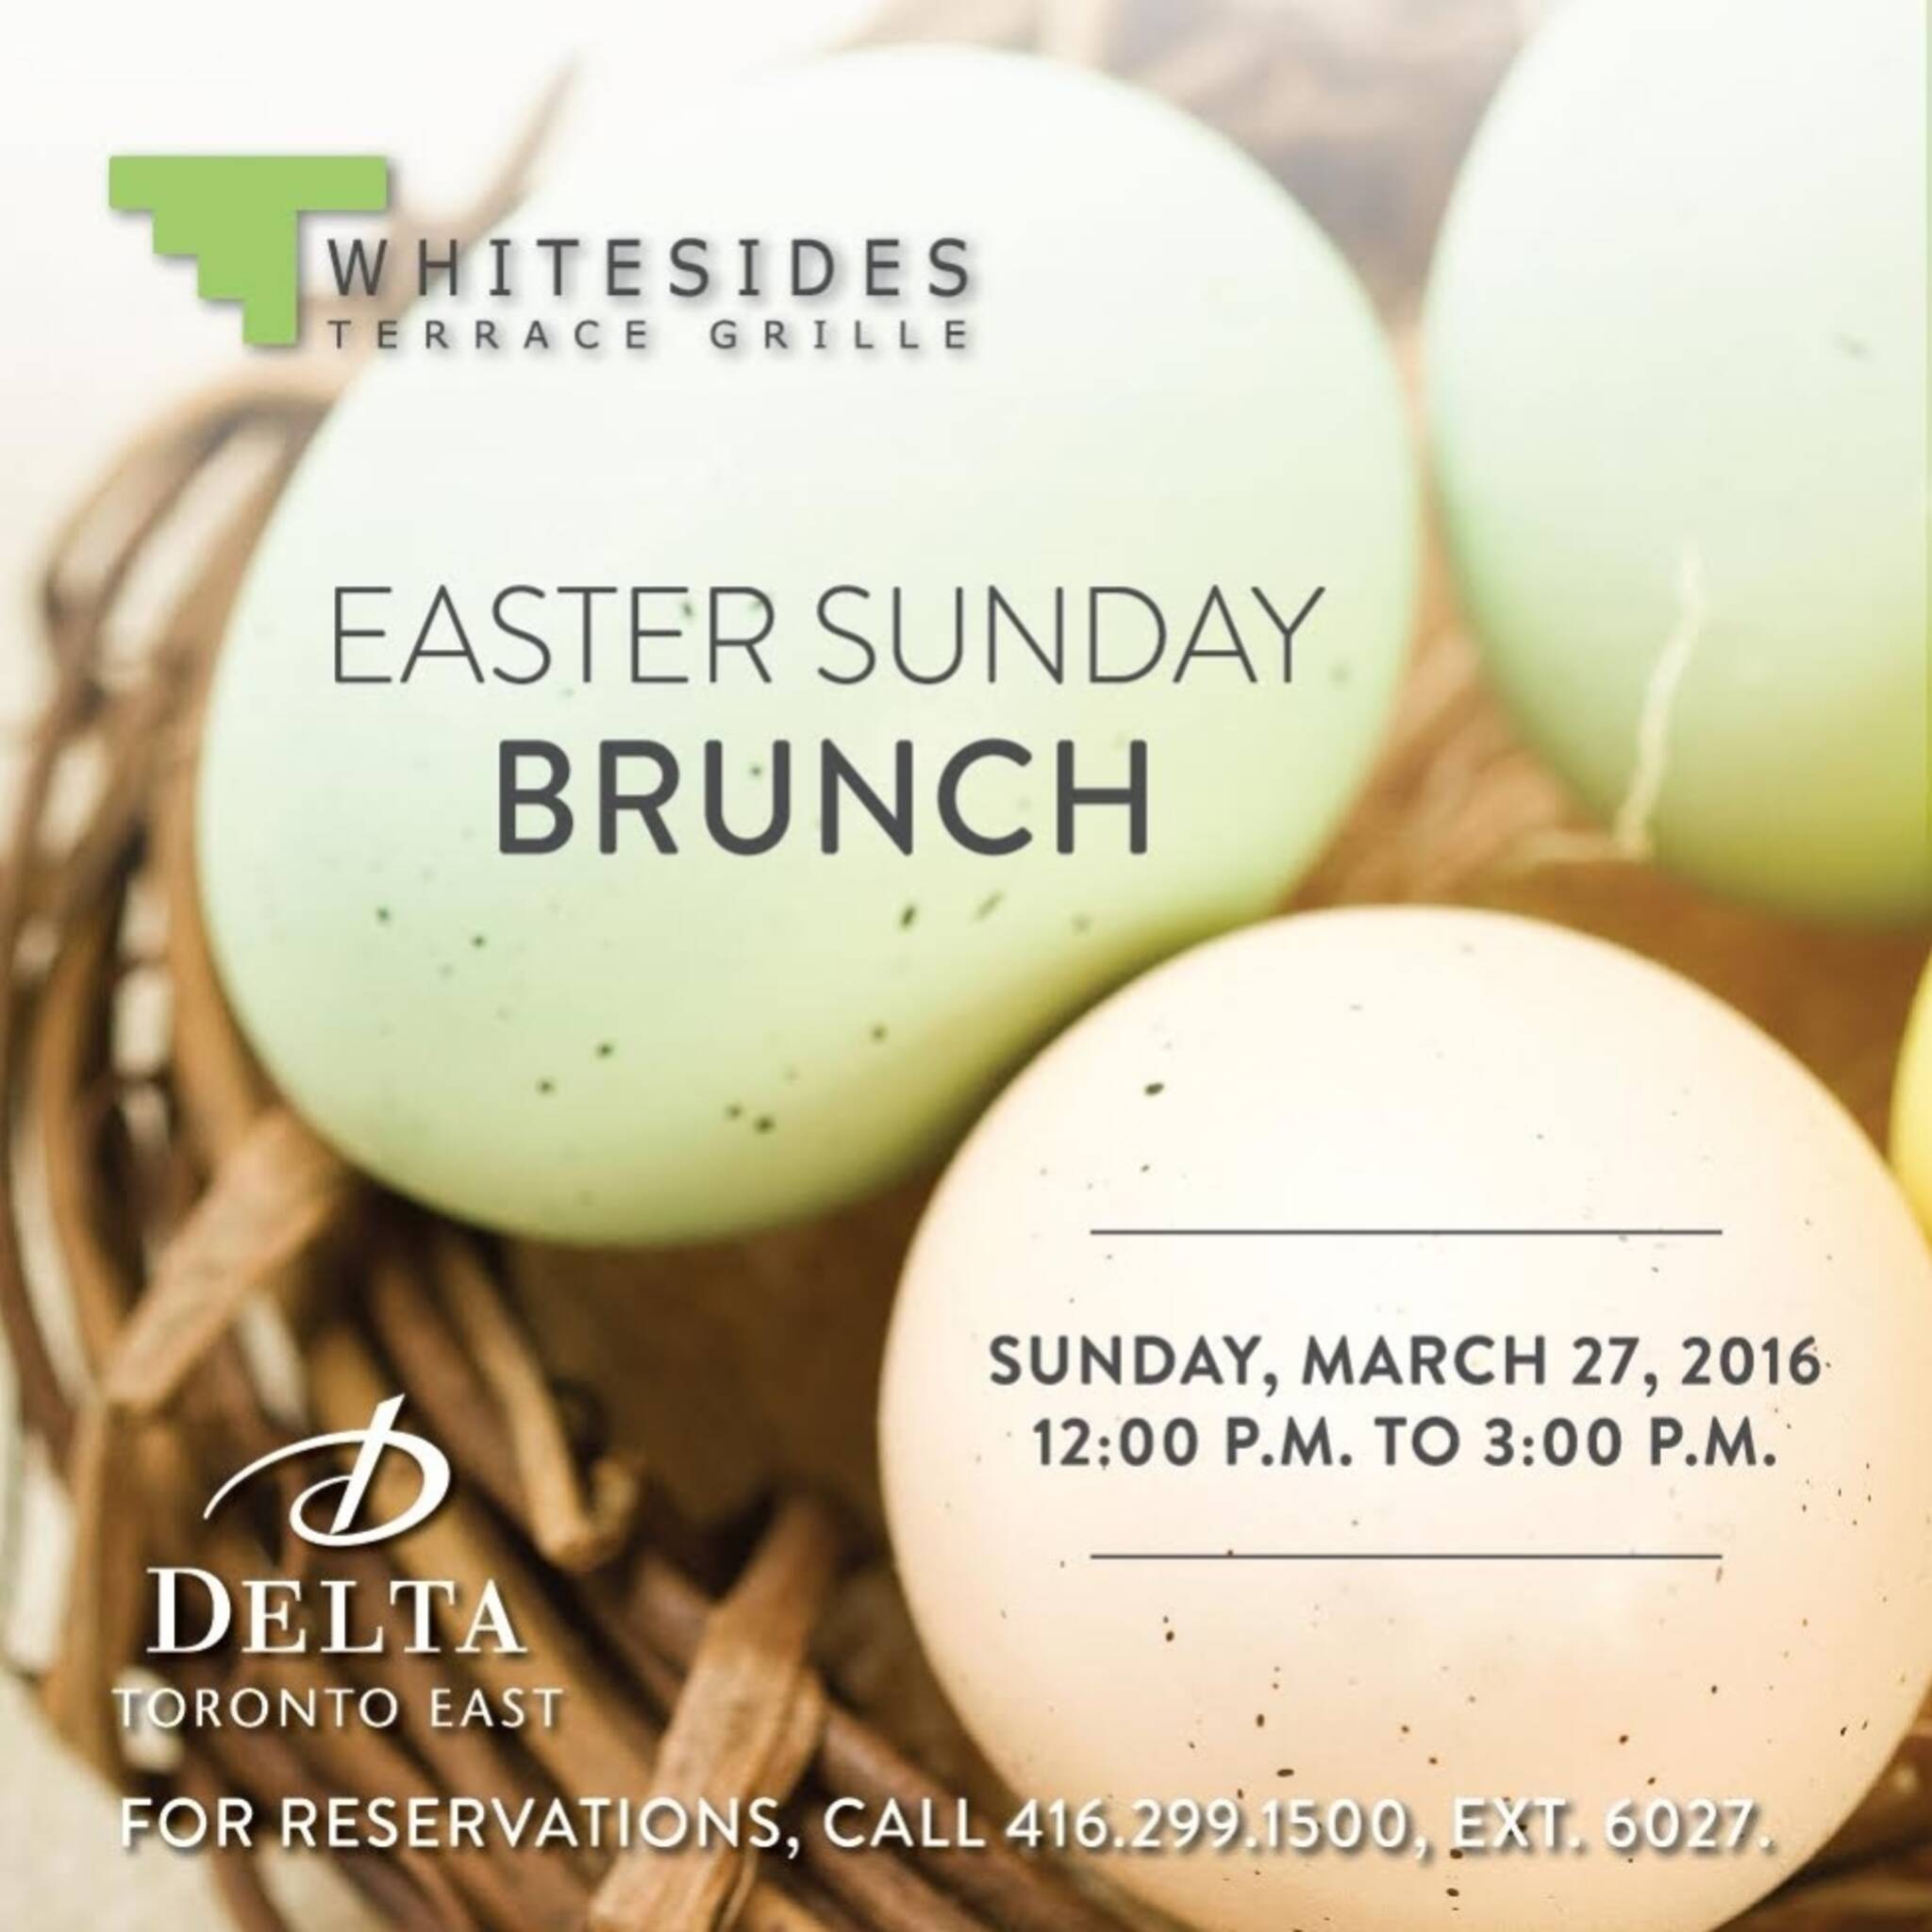 Delta Toronto East Presents Easter Sunday Brunch at Whitesides